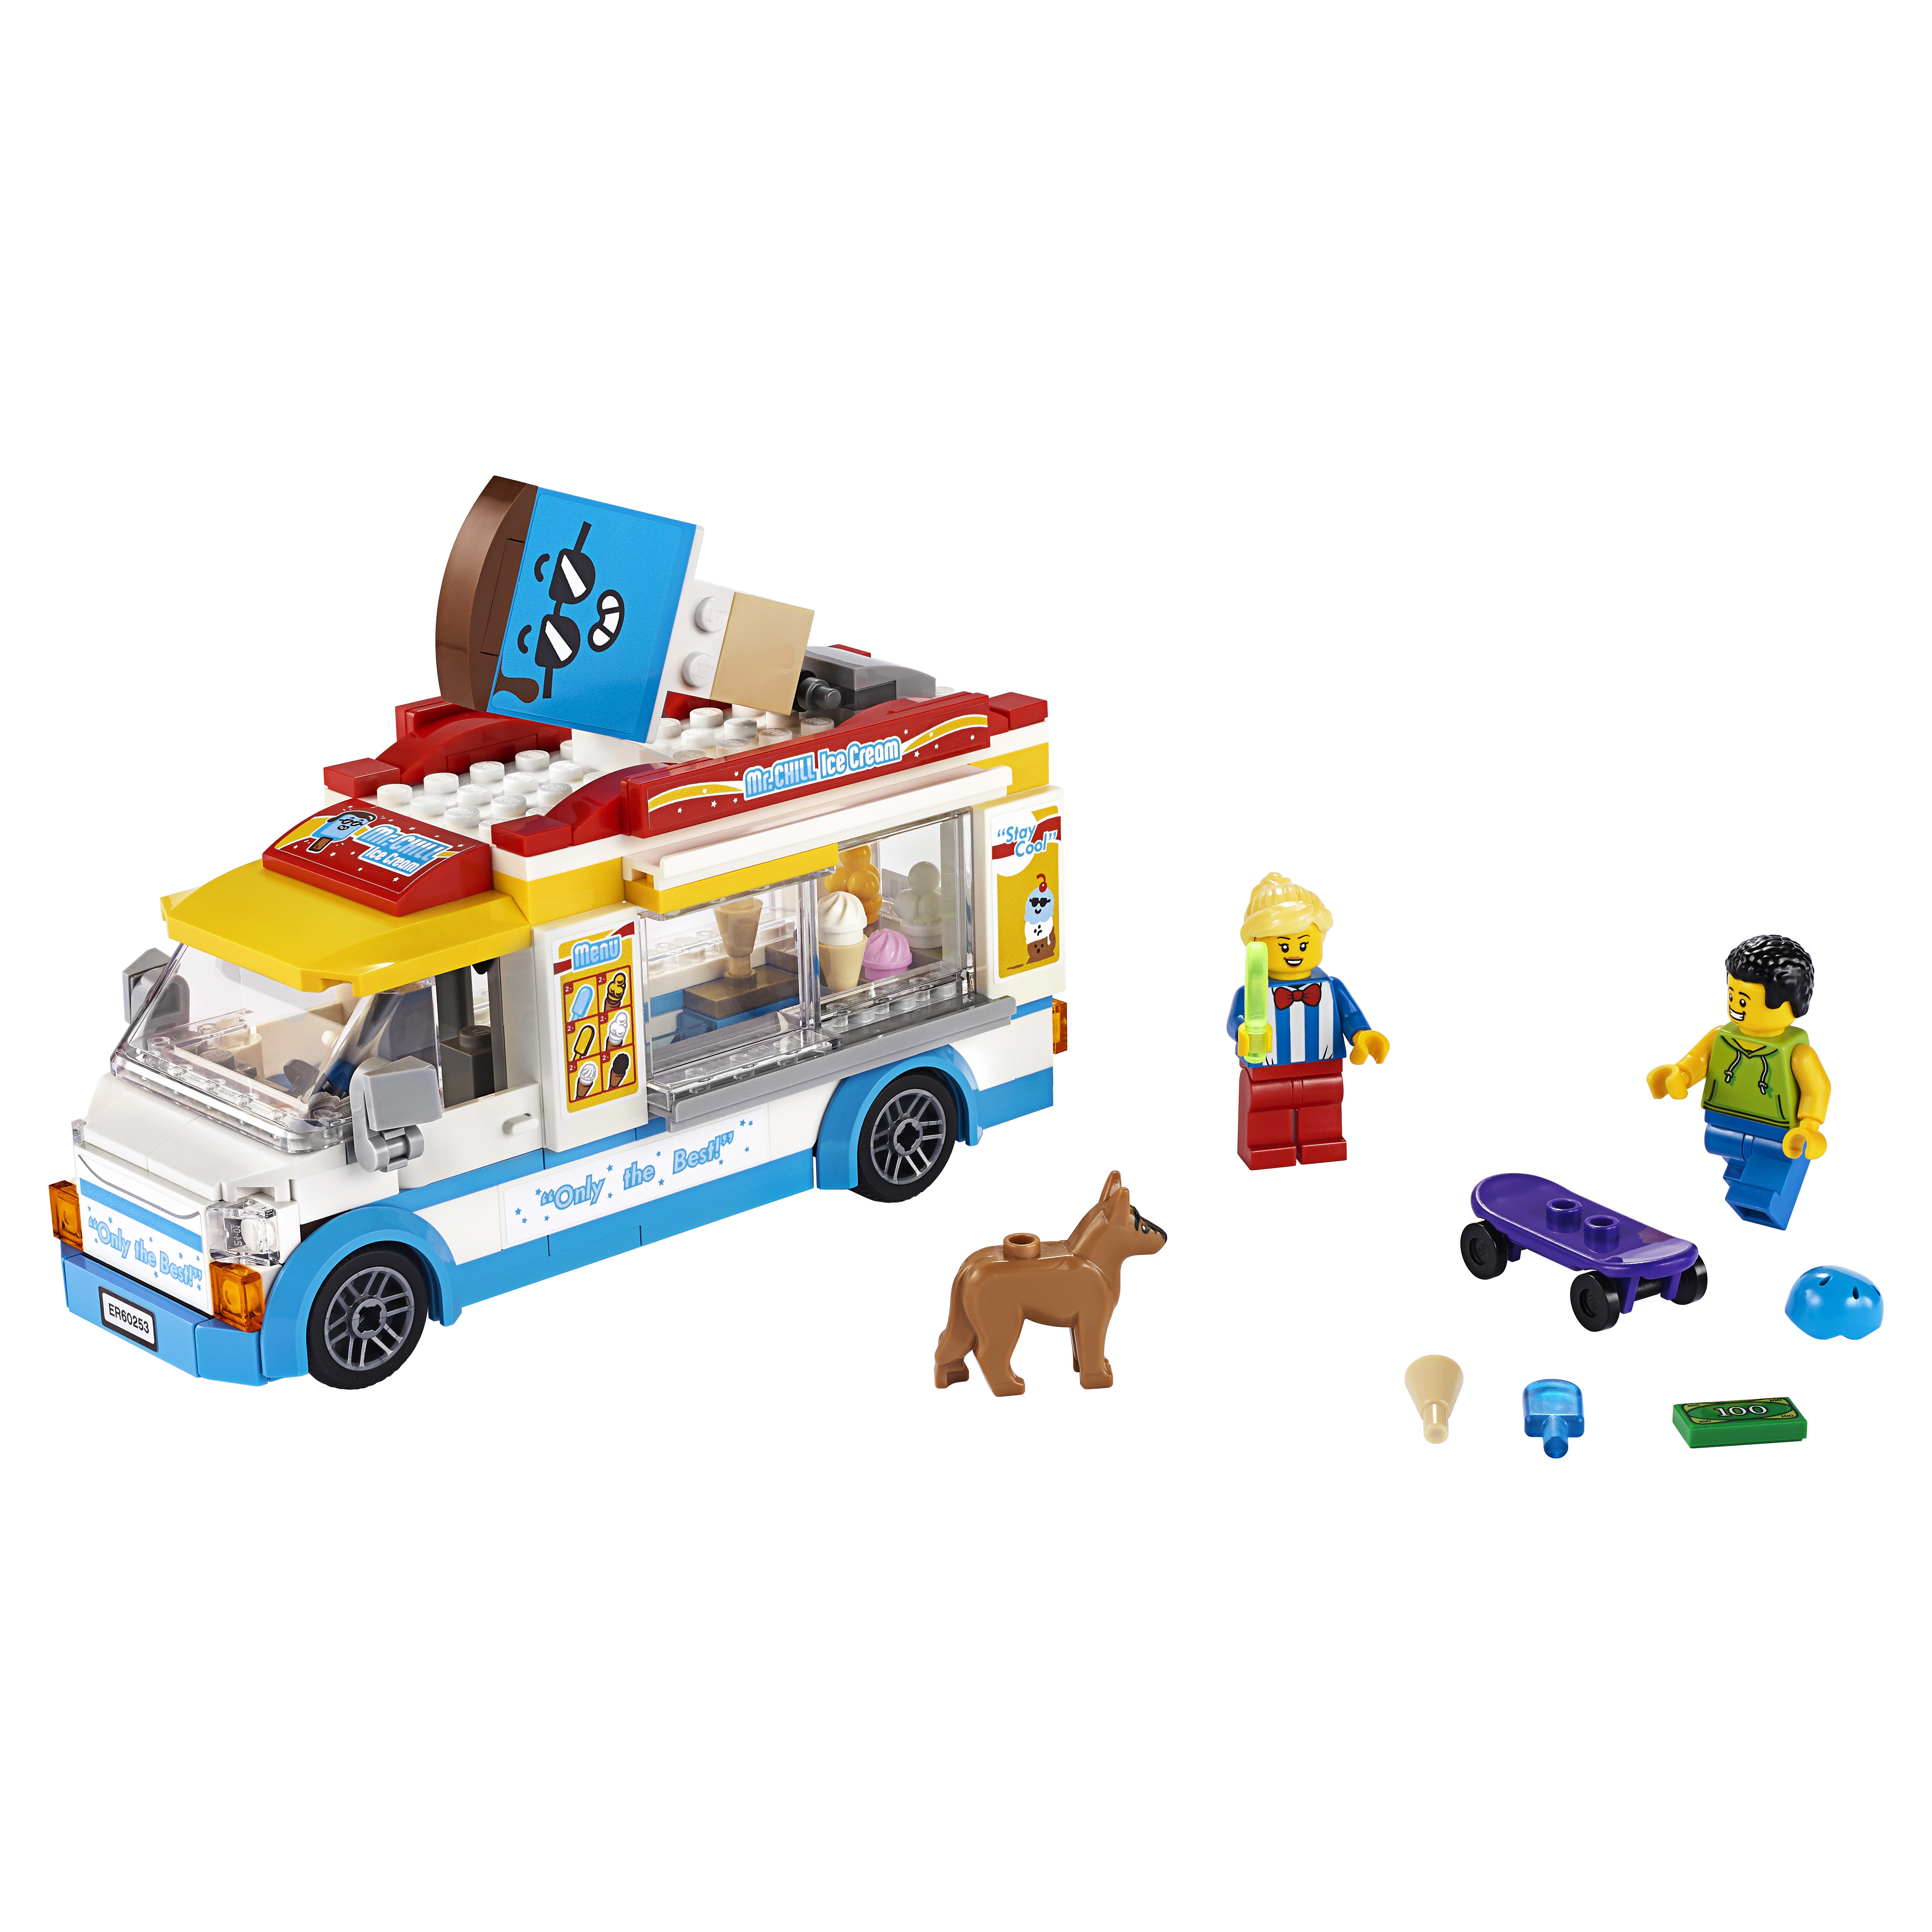 Конструктор LEGO City Great Vehicles 60253 Грузовик мороженщика конструктор lego city 60220 мусоровоз